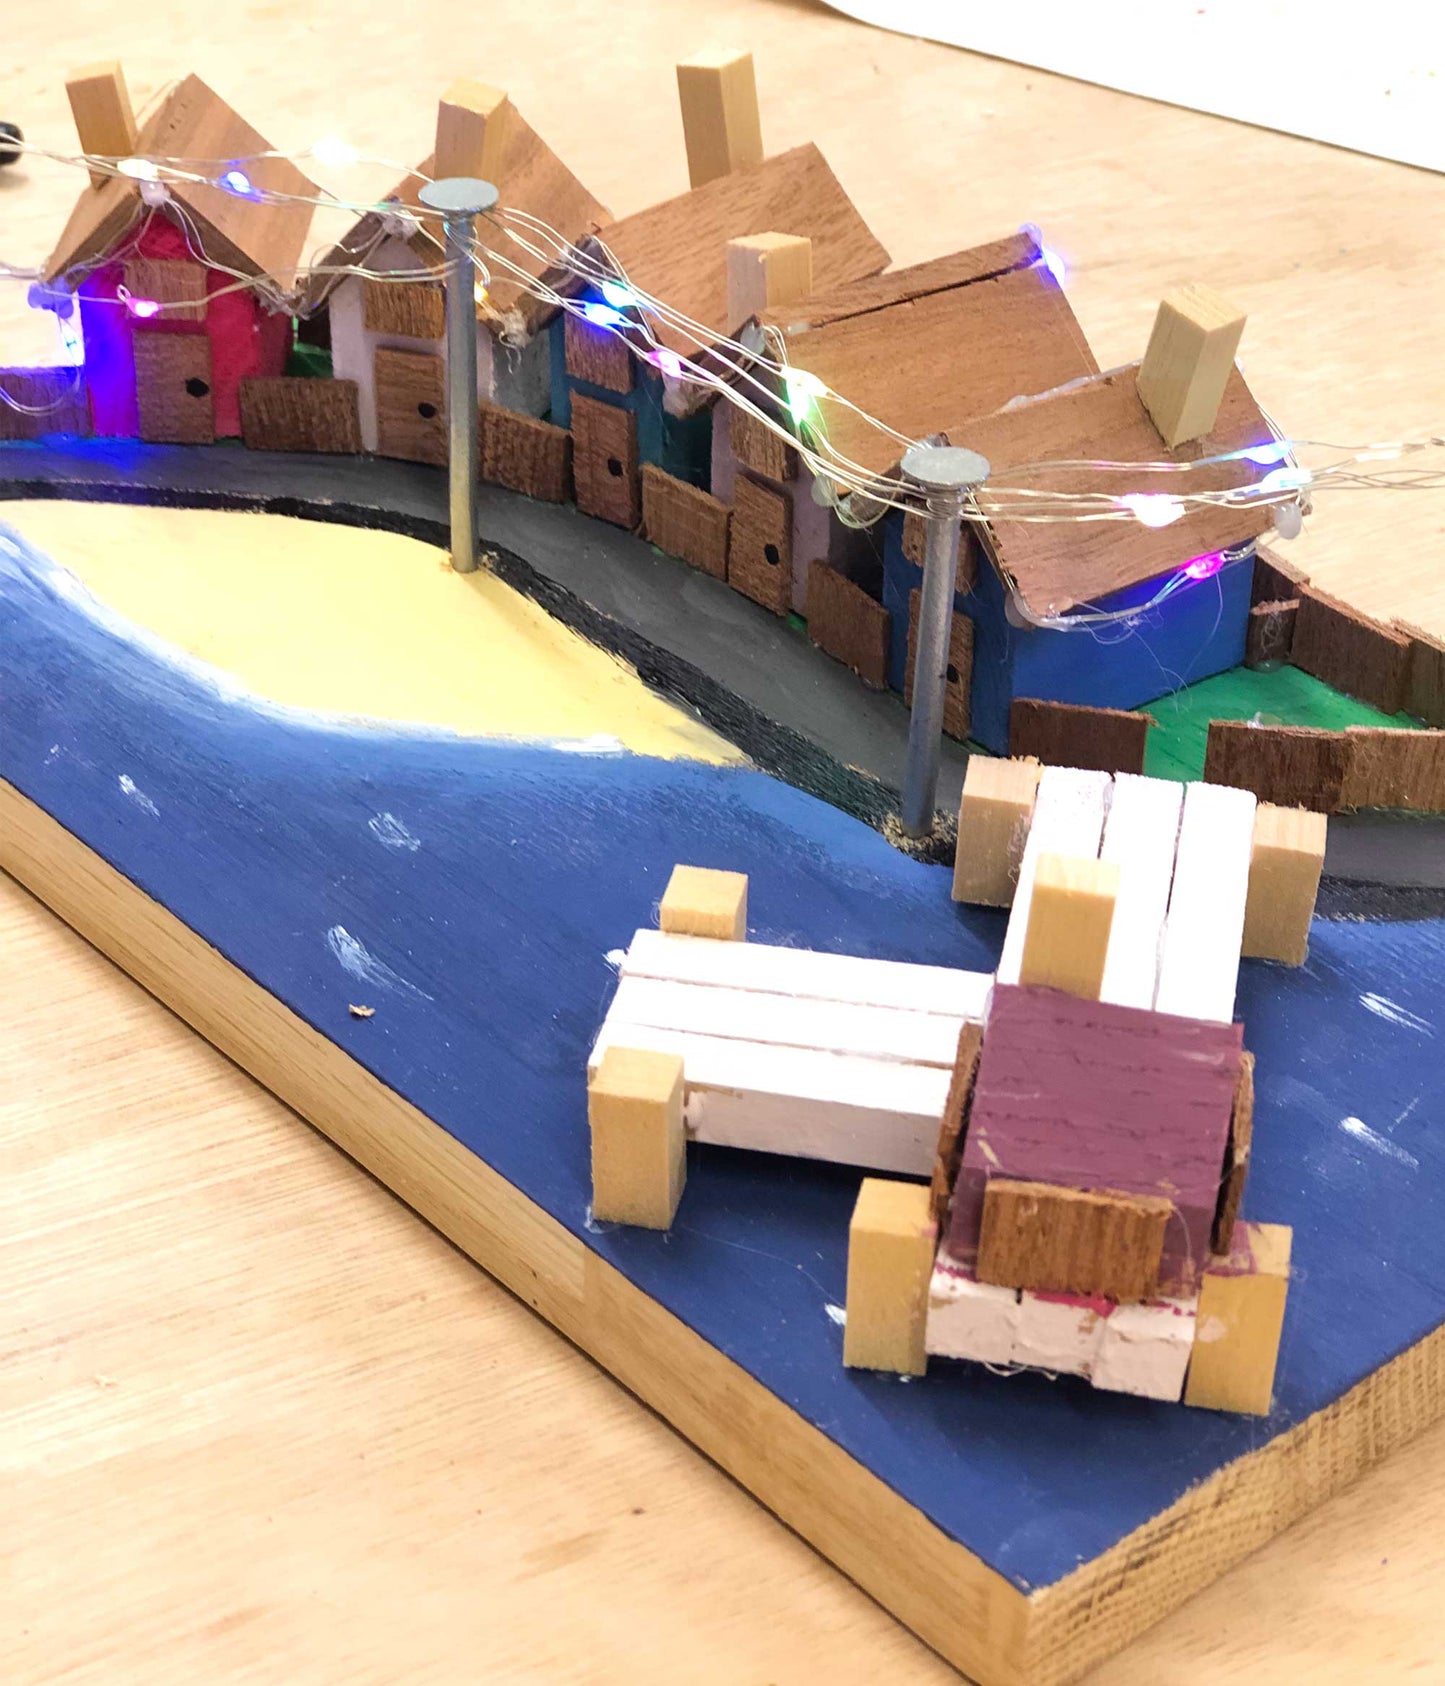 'Make 'n' Sip' Miniature Christmas Village (Adults)